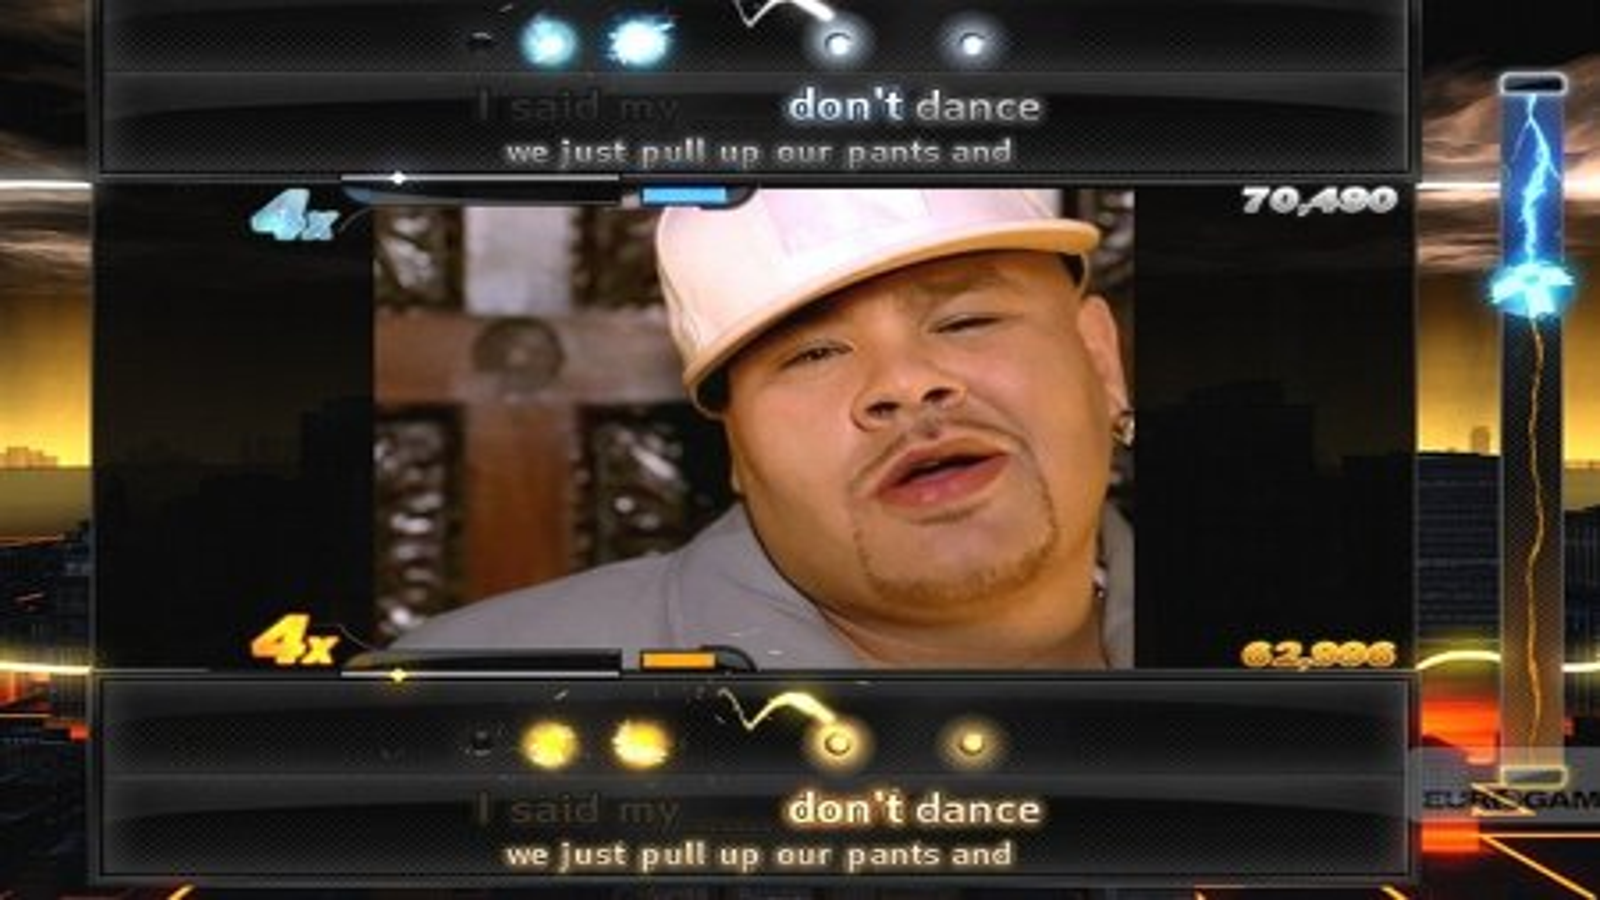 Def Jam - Rapstar PS3 Playstation 3